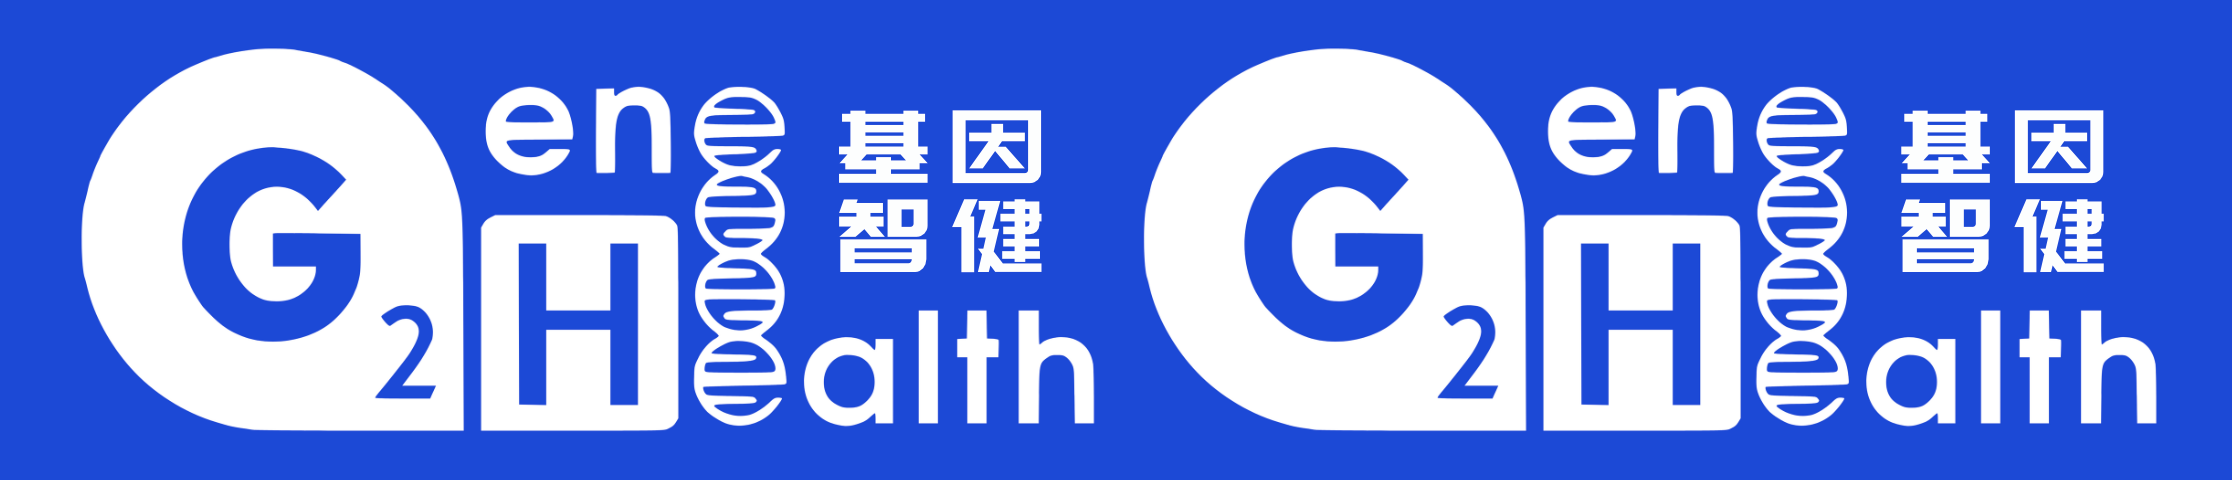 Gene to Health Limited 基因智健有限公司